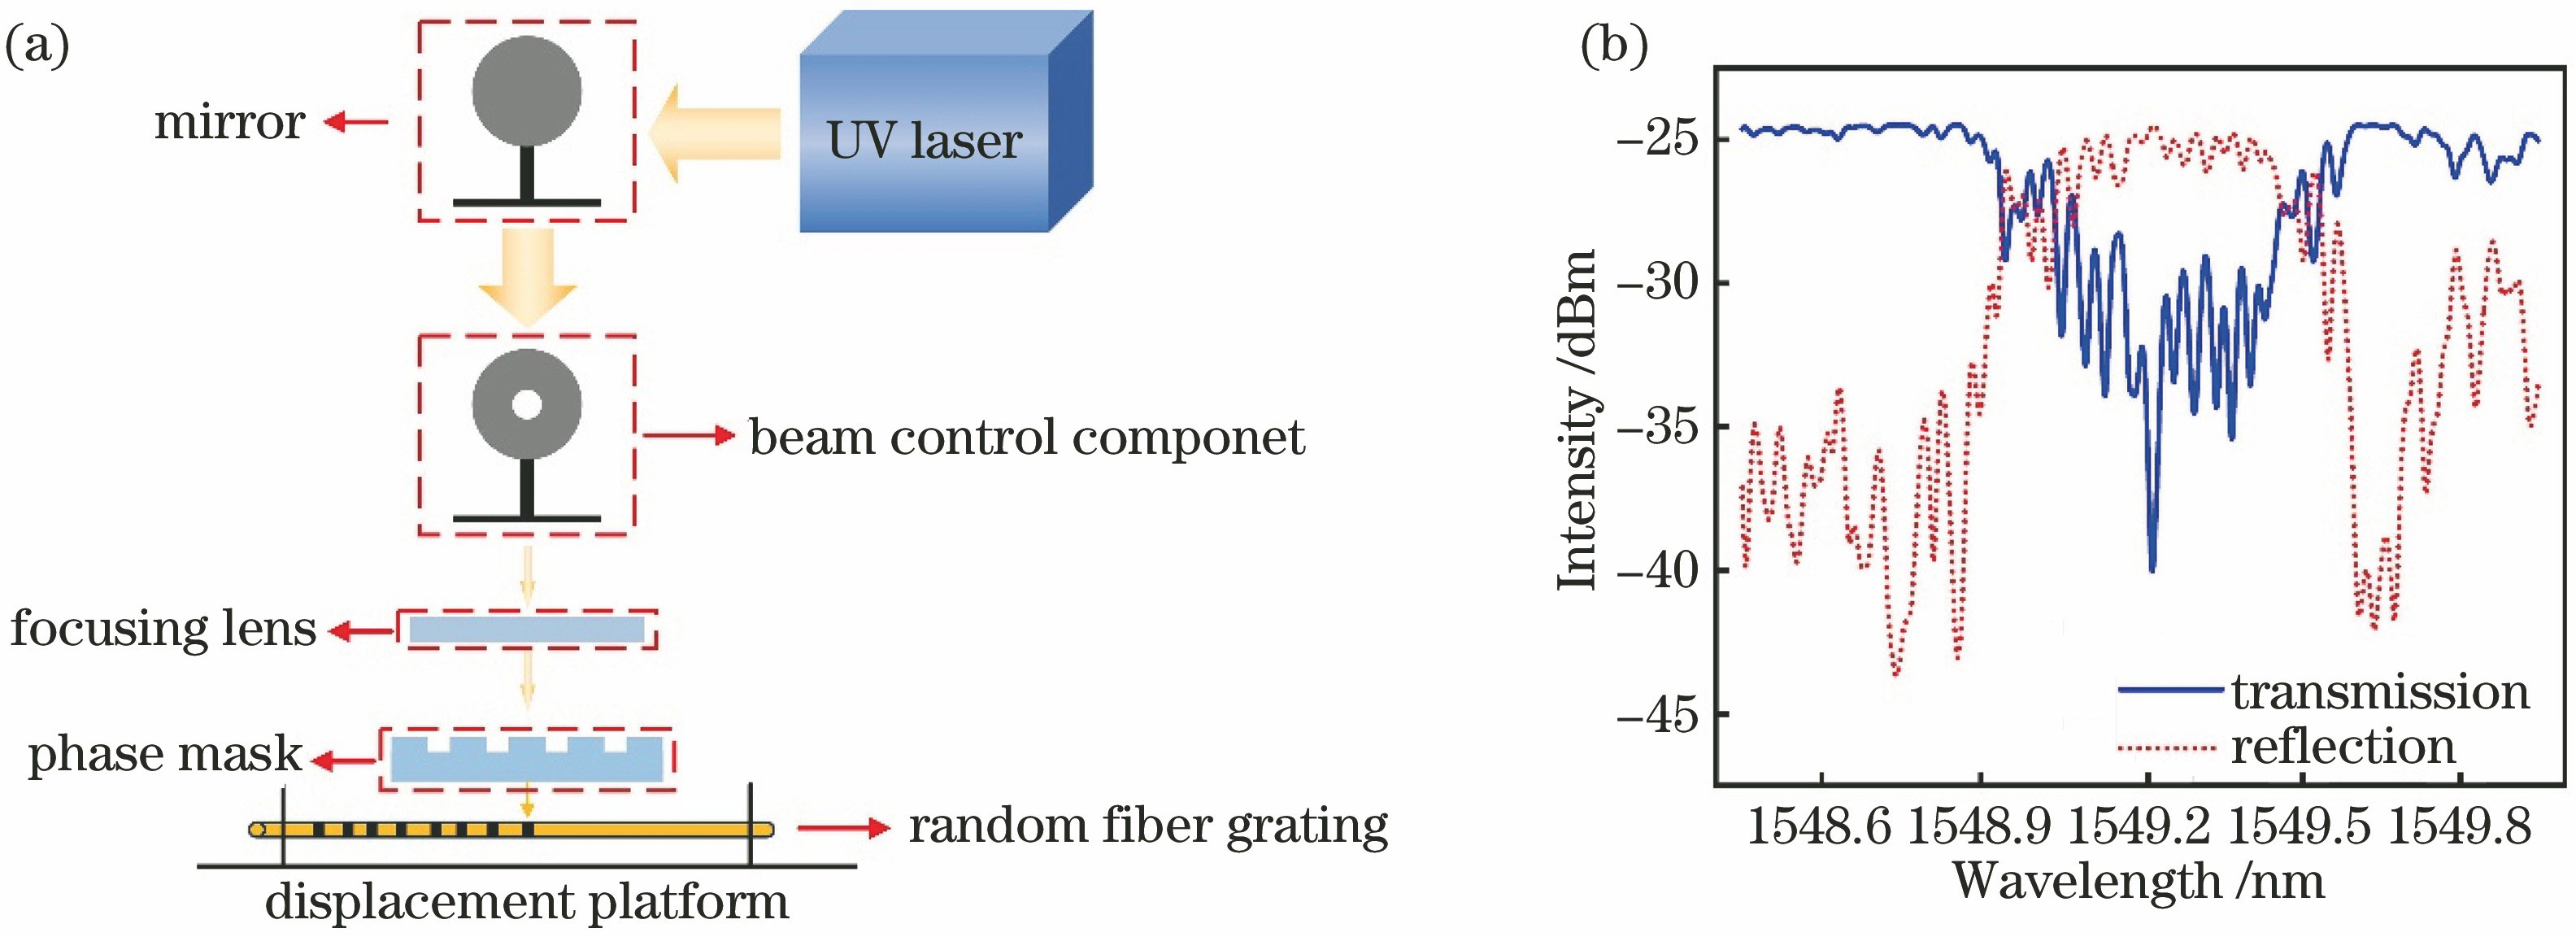 Random fiber grating. (a) Fabrication setup; (b) transmission and reflection spectra